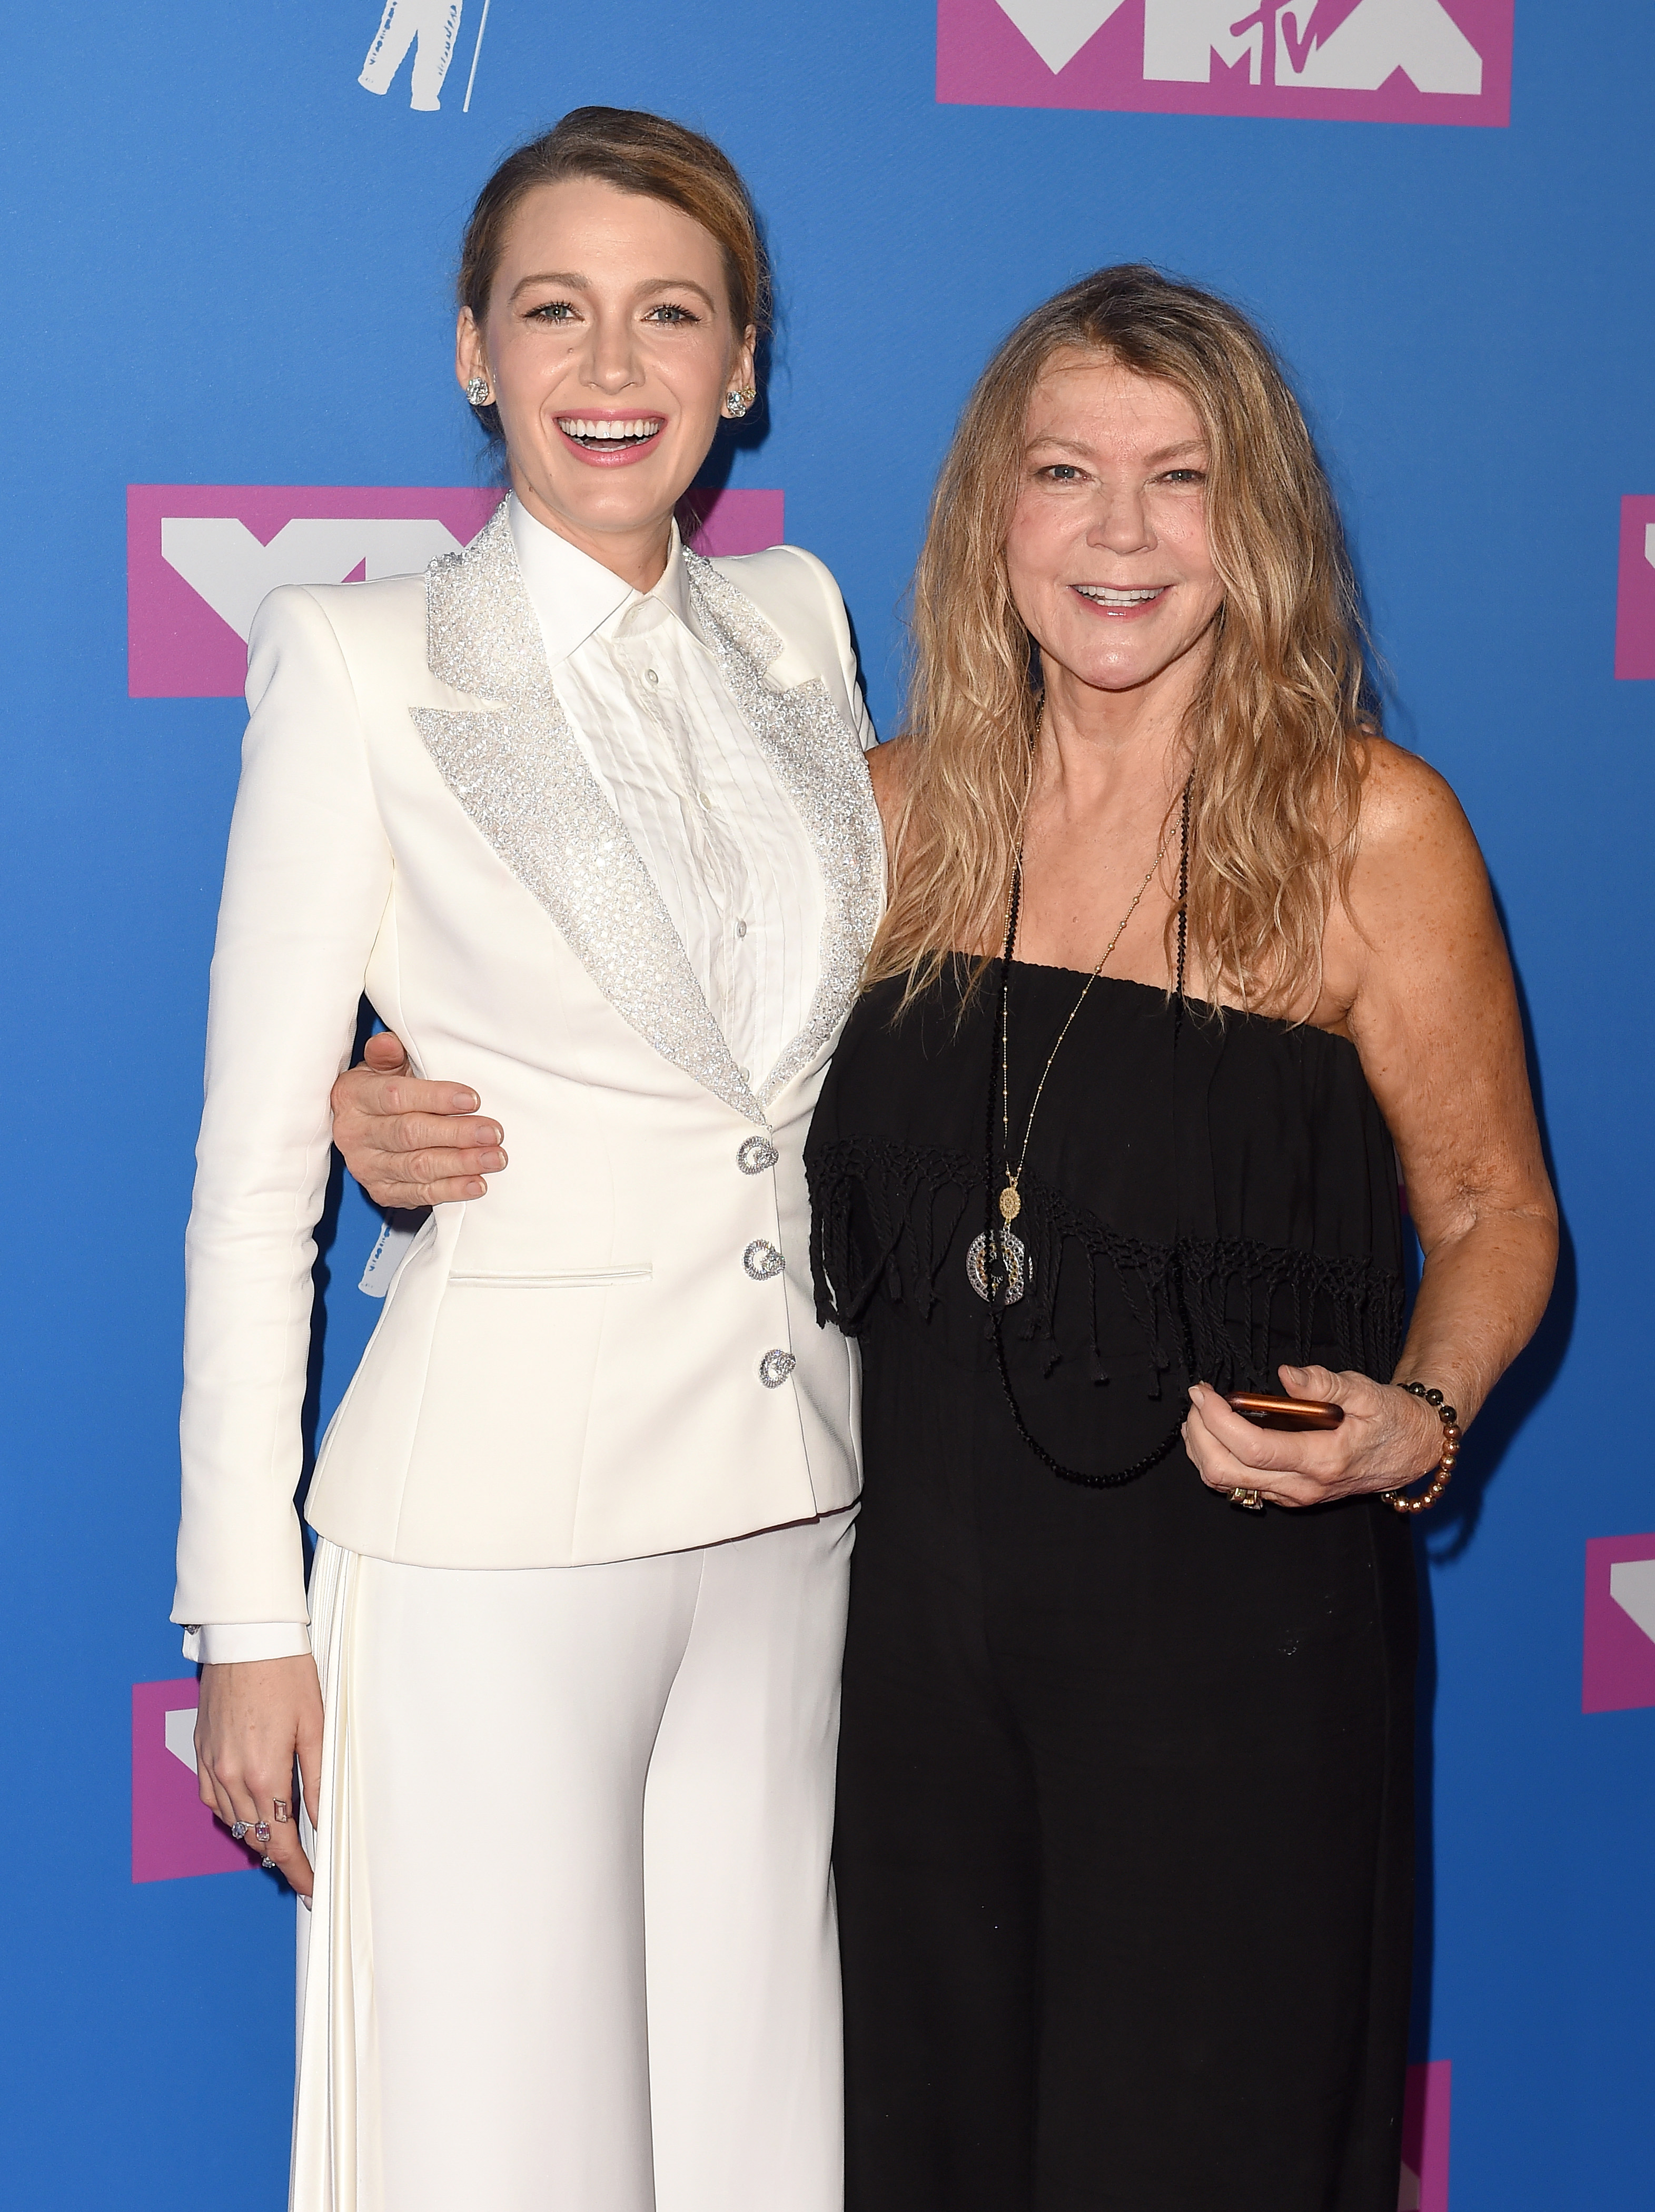 Blake Lively et Elaine Lively assistent aux MTV Video Music Awards à New York, le 20 août 2018. | Source : Getty Images